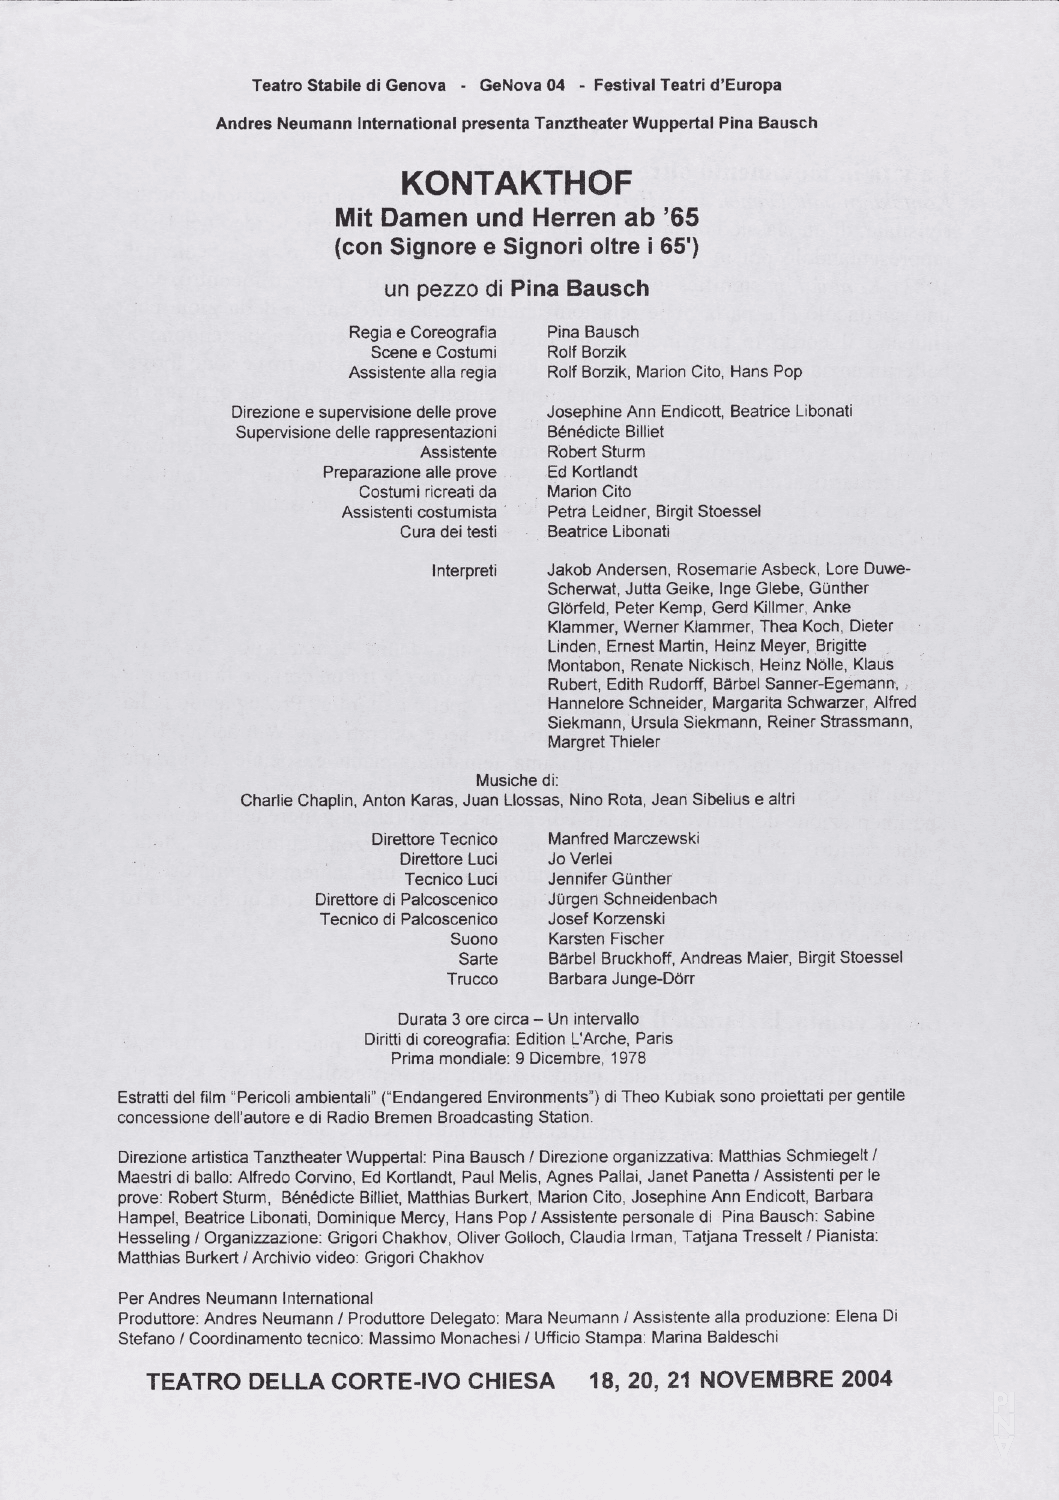 Evening leaflet for “Kontakthof. With Ladies and Gentlemen over 65” by Pina Bausch with Kontakthof-Ensemble Damen und Herren ab ´65 in in Genua, 11/18/2004 – 11/21/2004